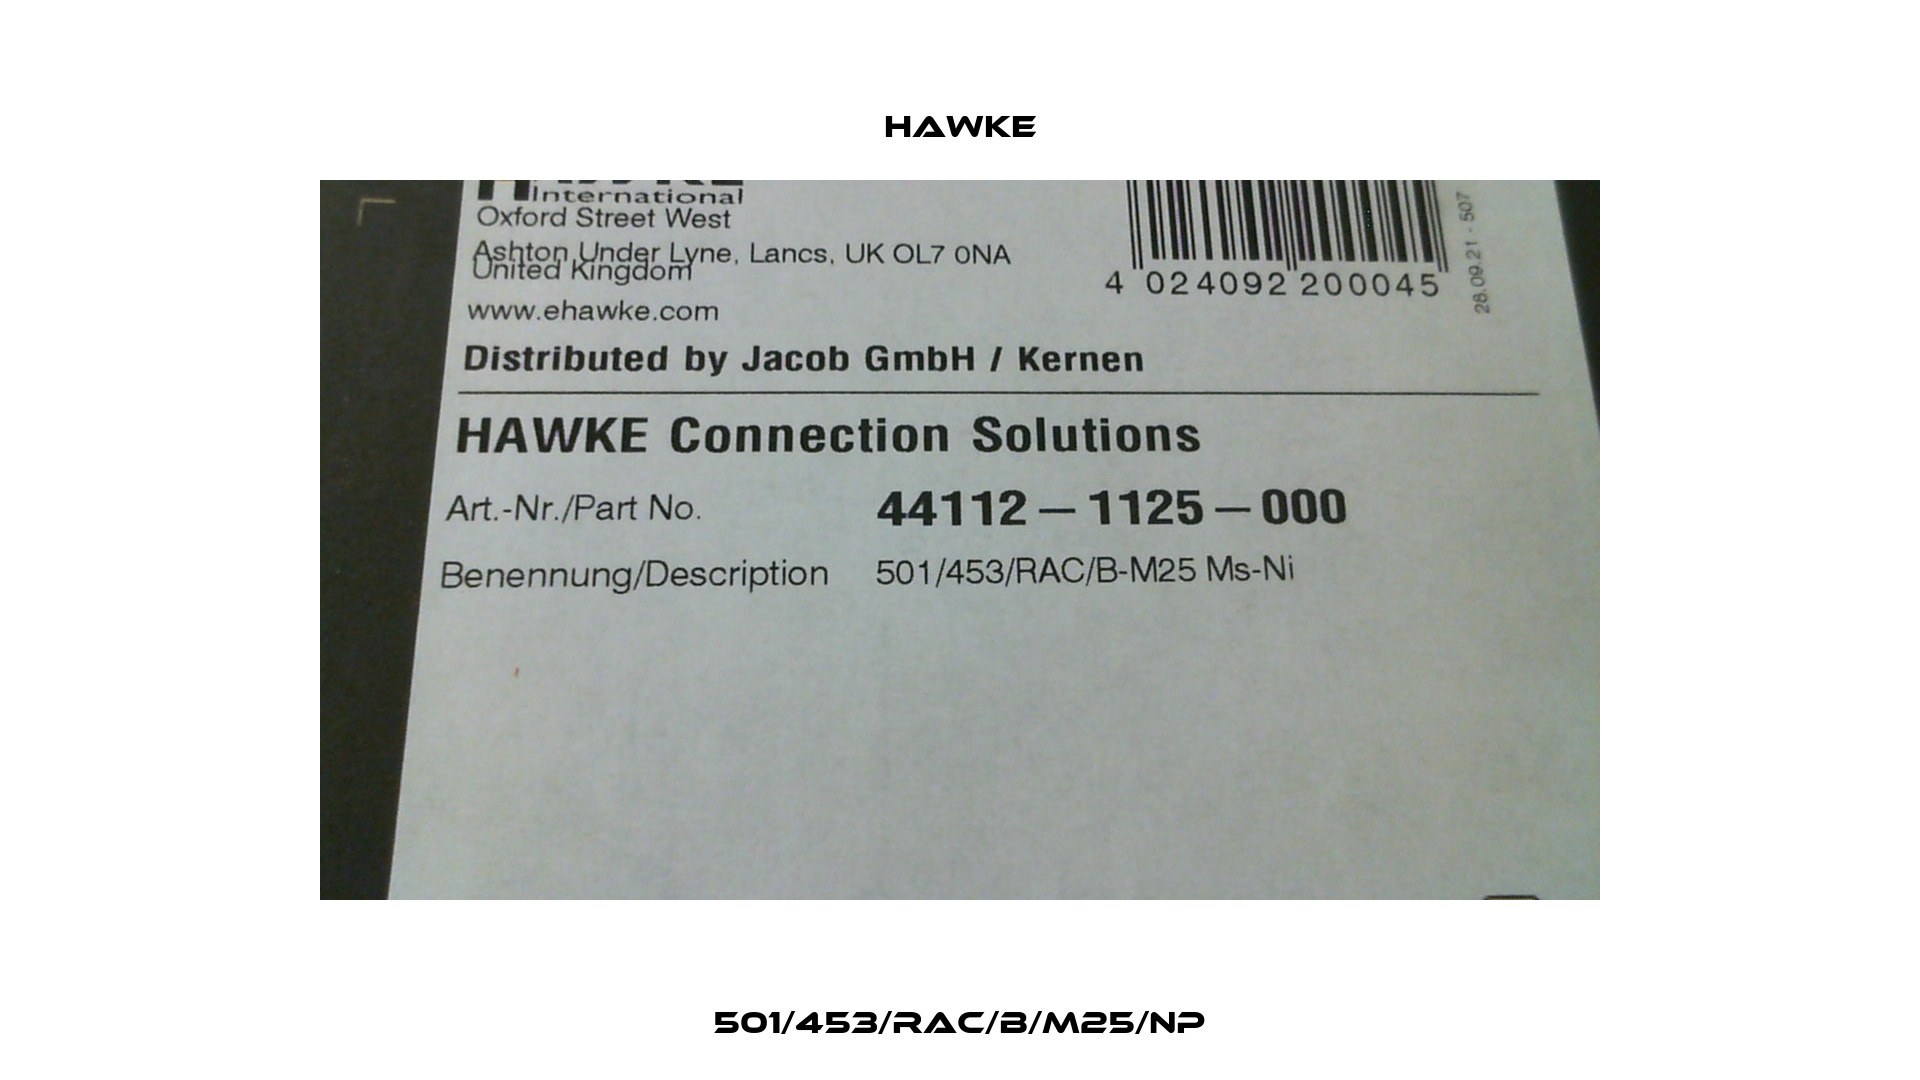 501/453/RAC/B/M25/NP Hawke